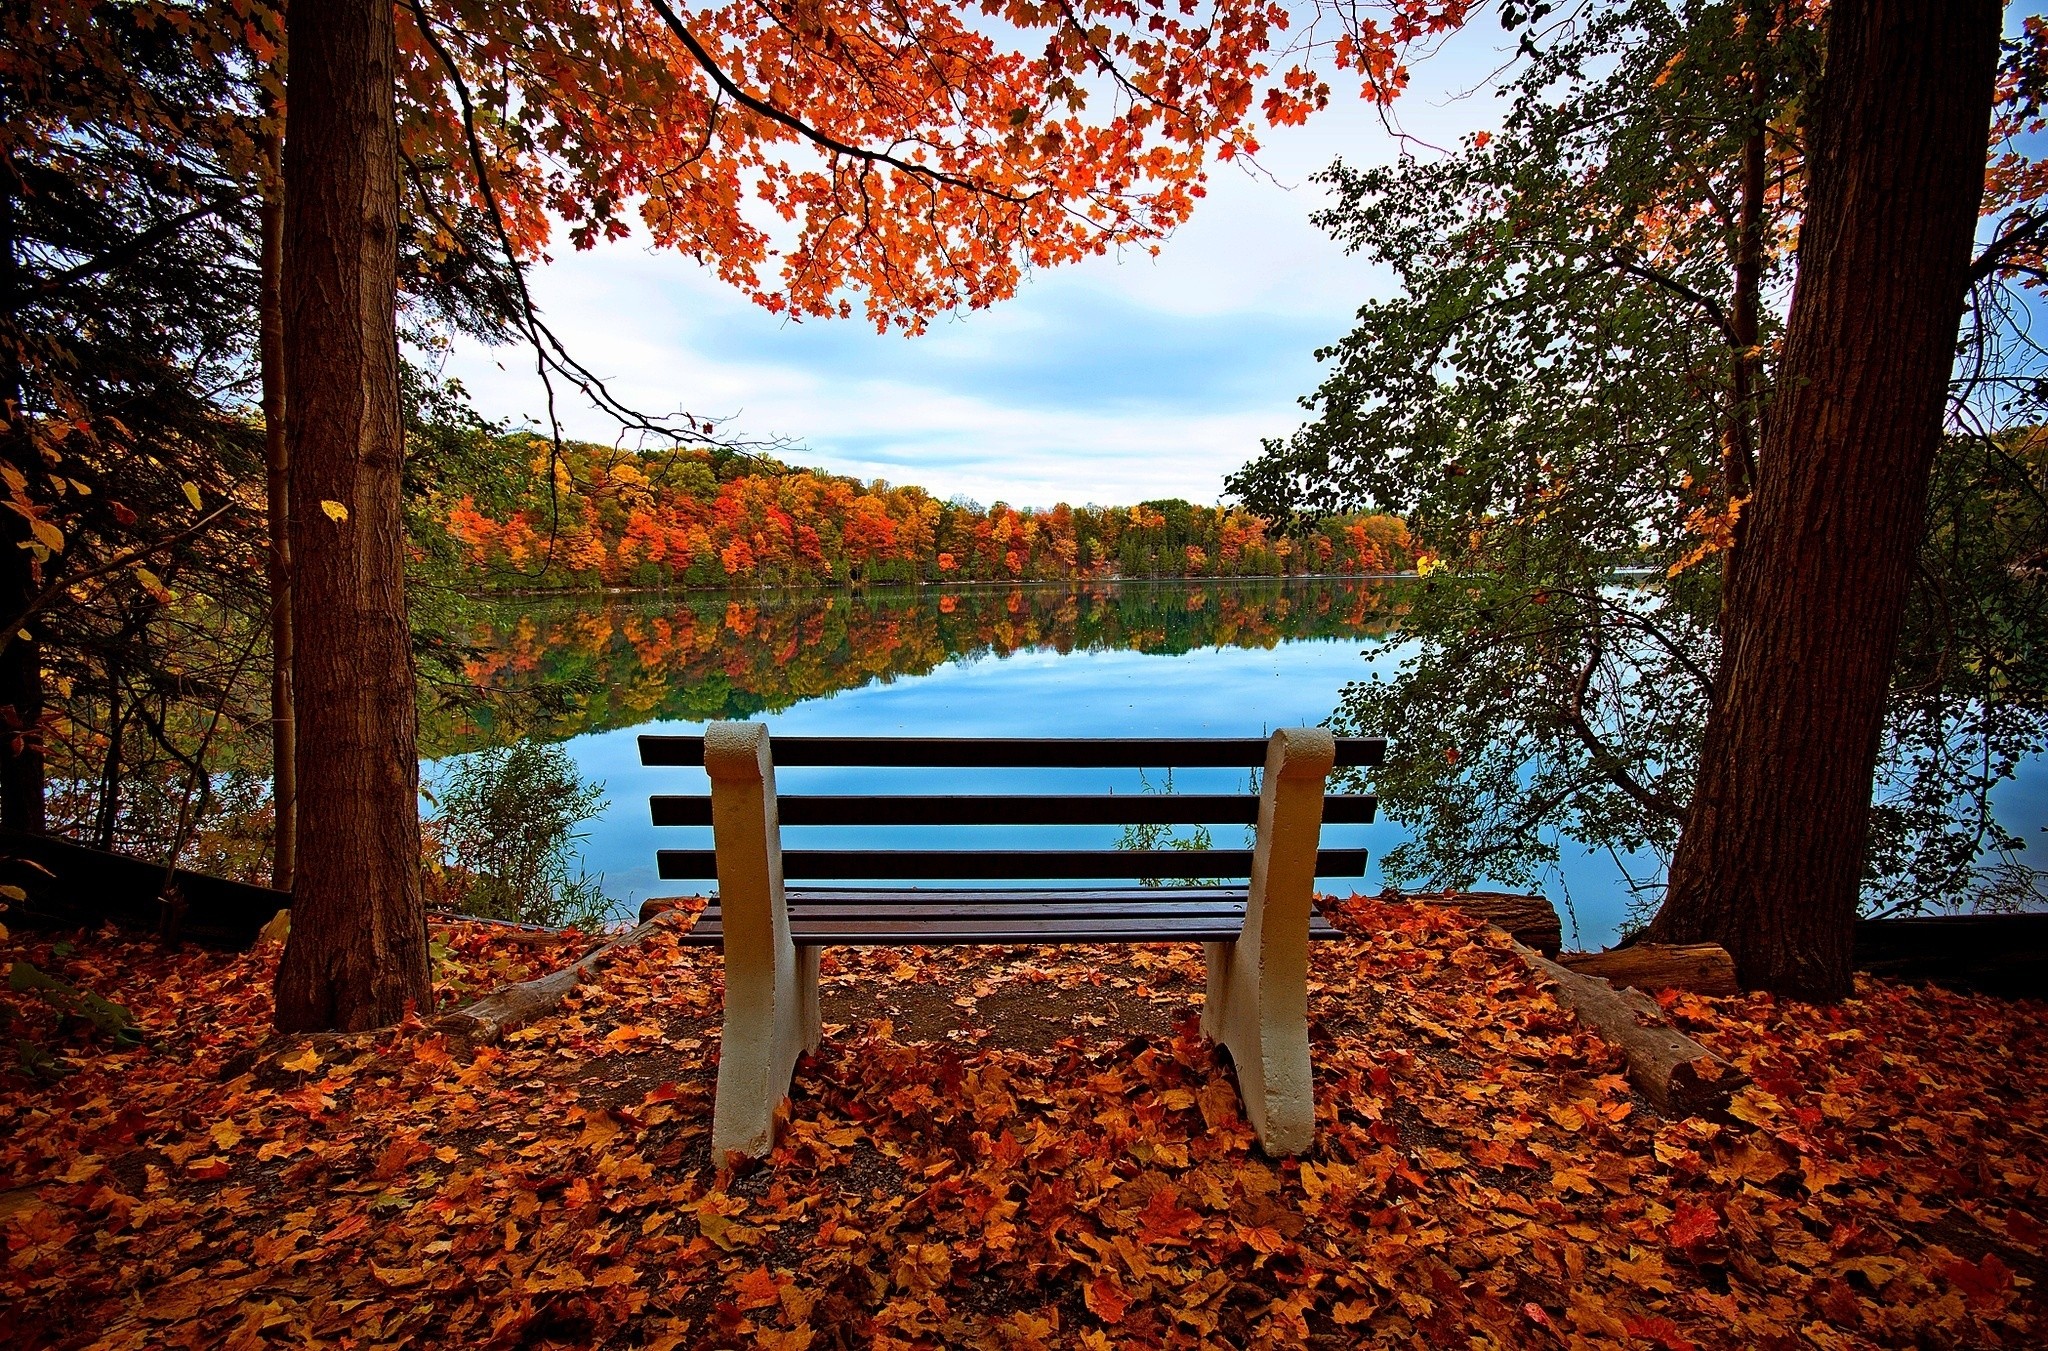 rivers, nature, autumn, trees, lake, bench